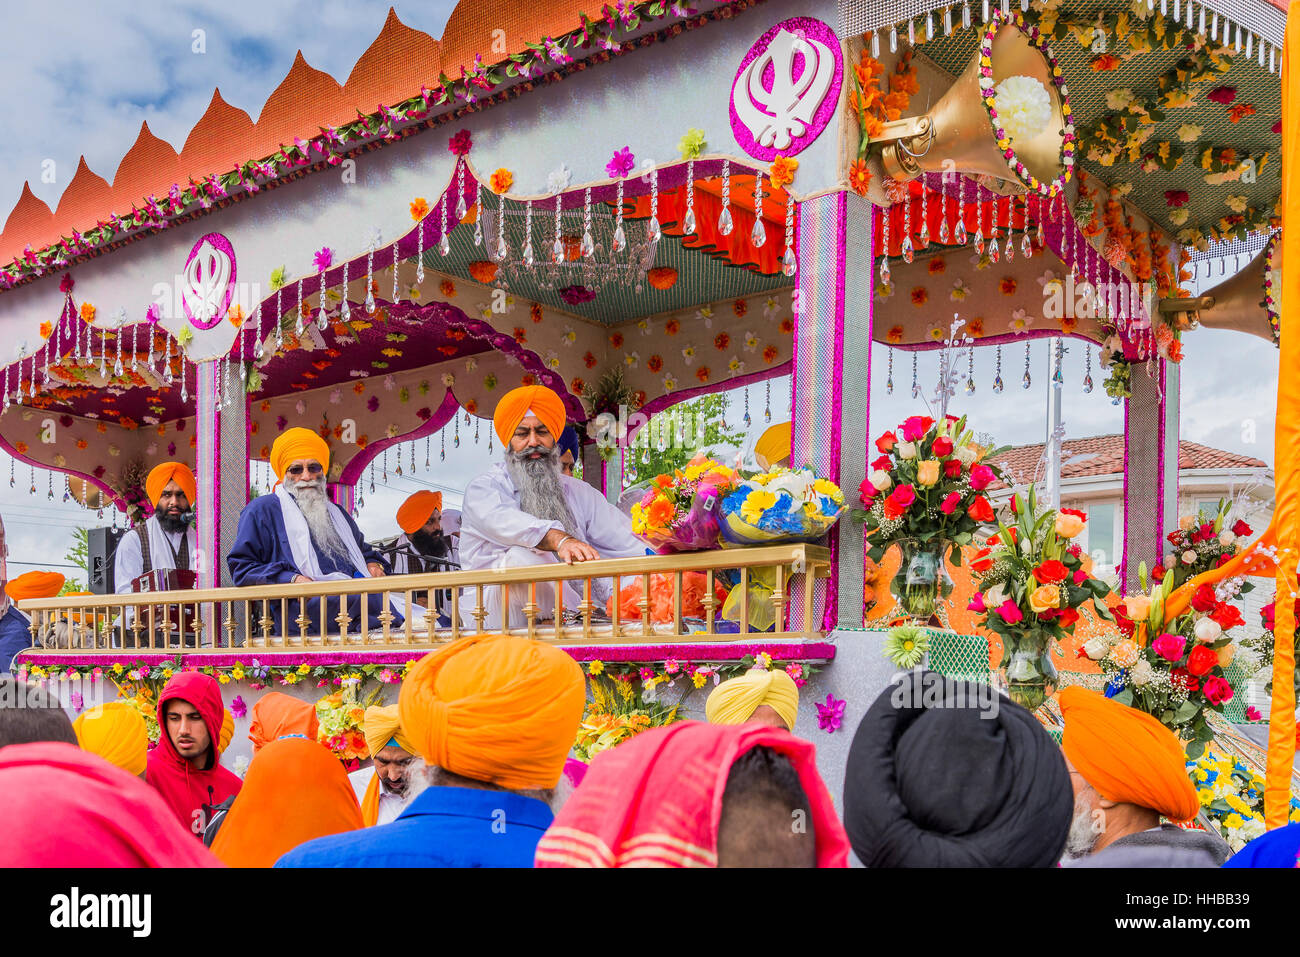 Sfilata galleggiante portante la sacra Scrittura, il Guru Granth Sahib, xi guru dei sikh. Vaisakhi Parade, Surrey, British Columbia, Canada Foto Stock